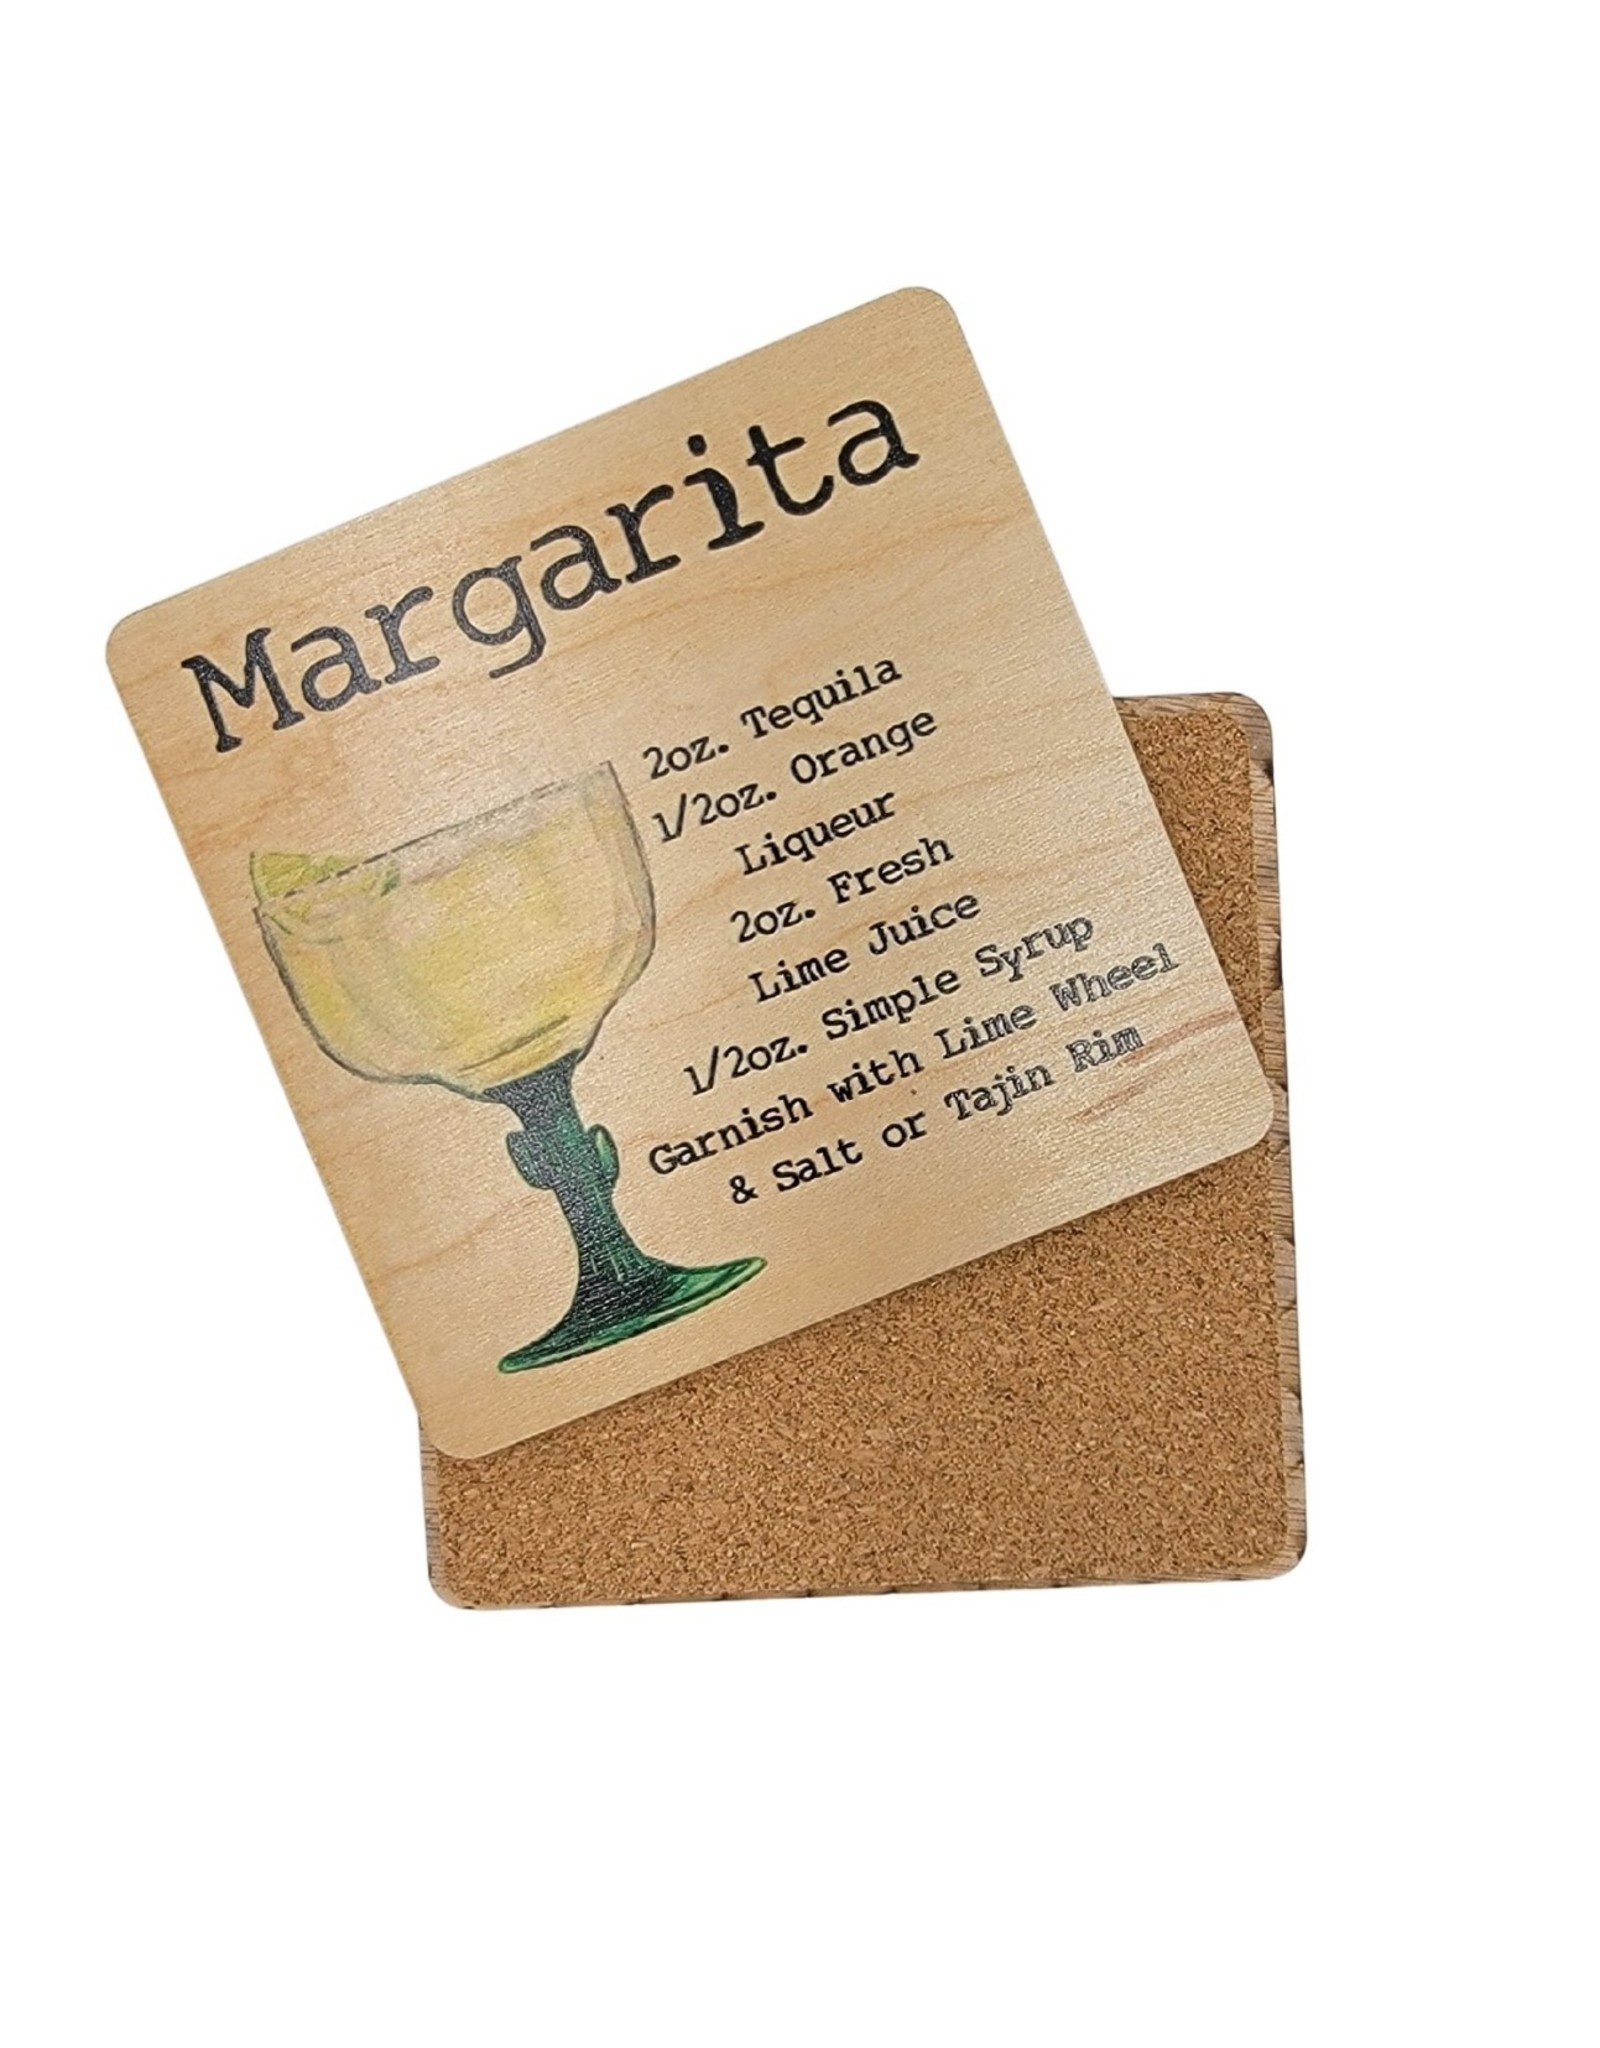 Margarita Cocktail Wooden Bar Coaster